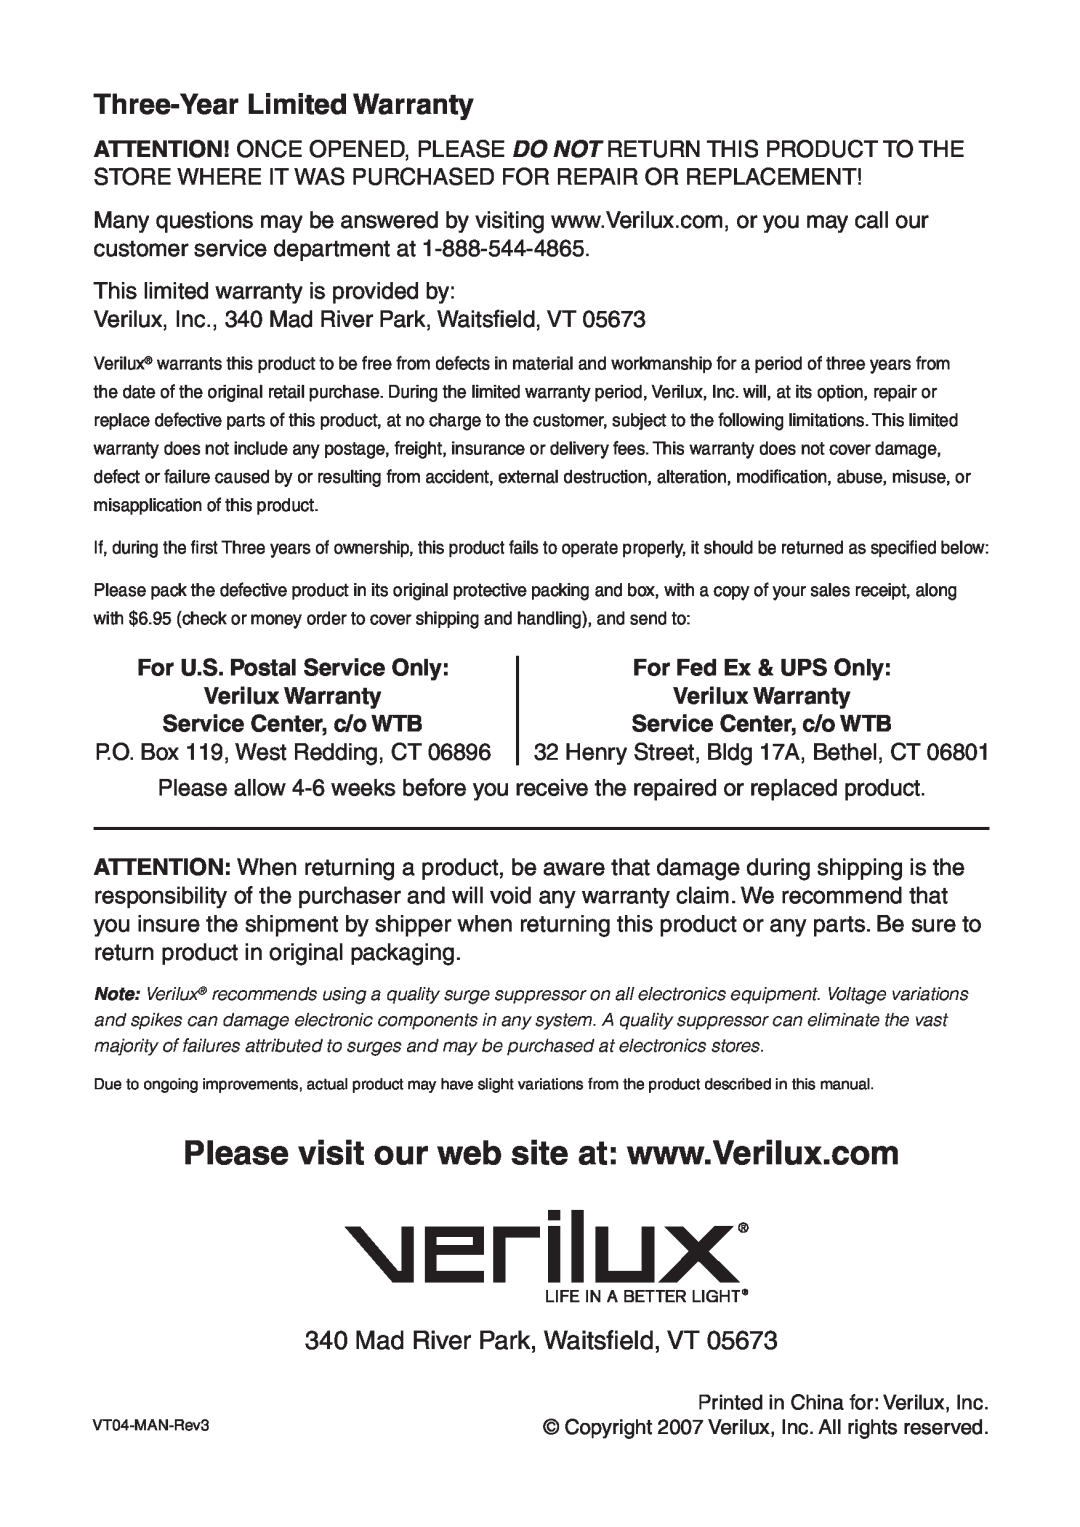 Verilux VT04 Three-YearLimited Warranty, Mad River Park, Waitsﬁeld, VT, For U.S. Postal Service Only Verilux Warranty 